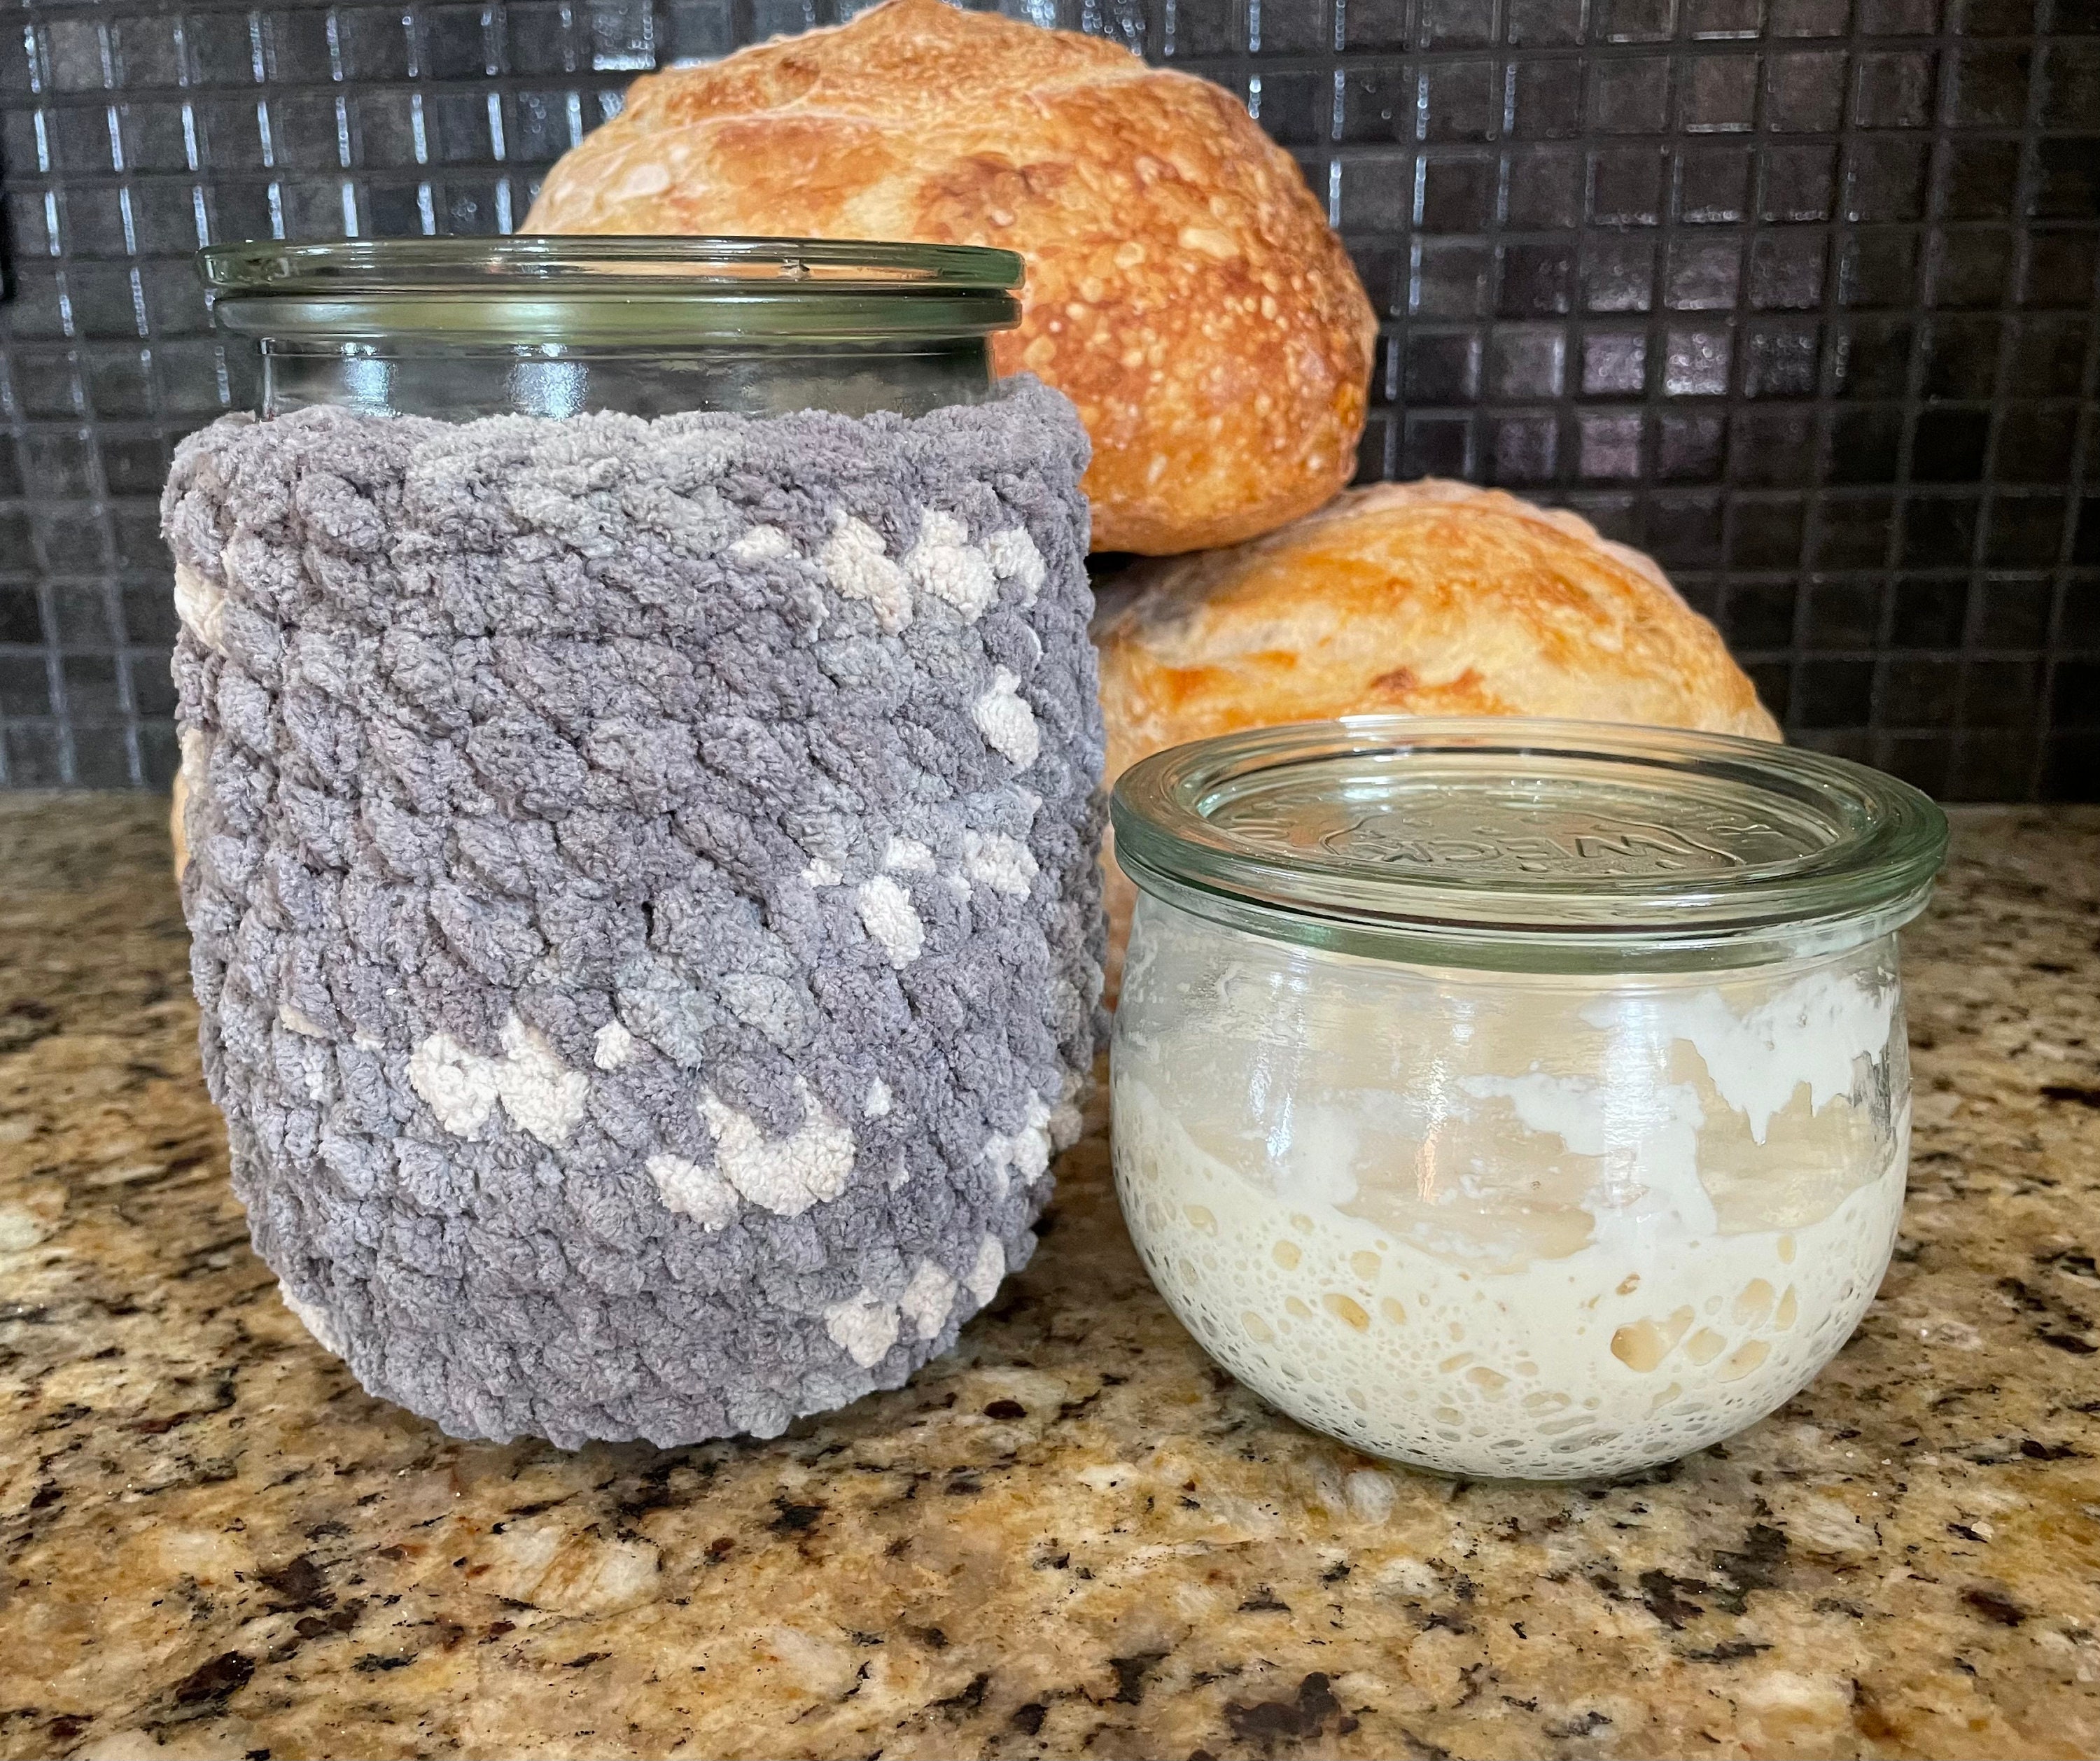 Lieonvis Sourdough Starter Jar,Sourdough Starter Kit for Sourdough Bread Baking Supplies with Silicone Scraper Cloth Cover for Sourdough Bread Baking